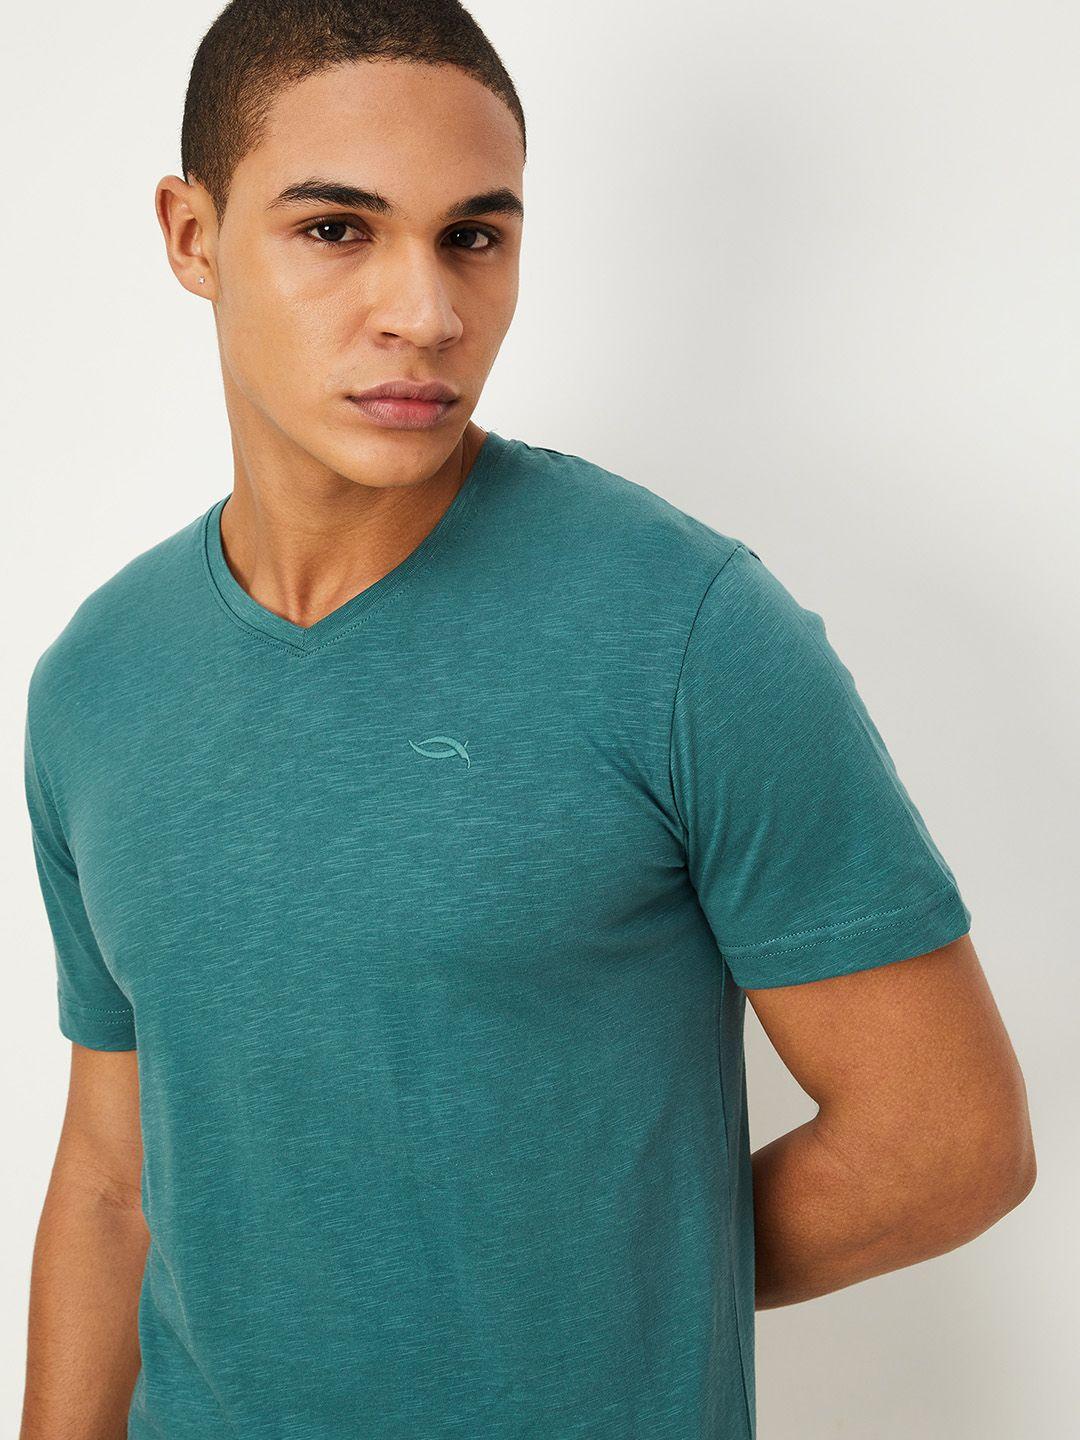 max v-neck short sleeves cotton t-shirt